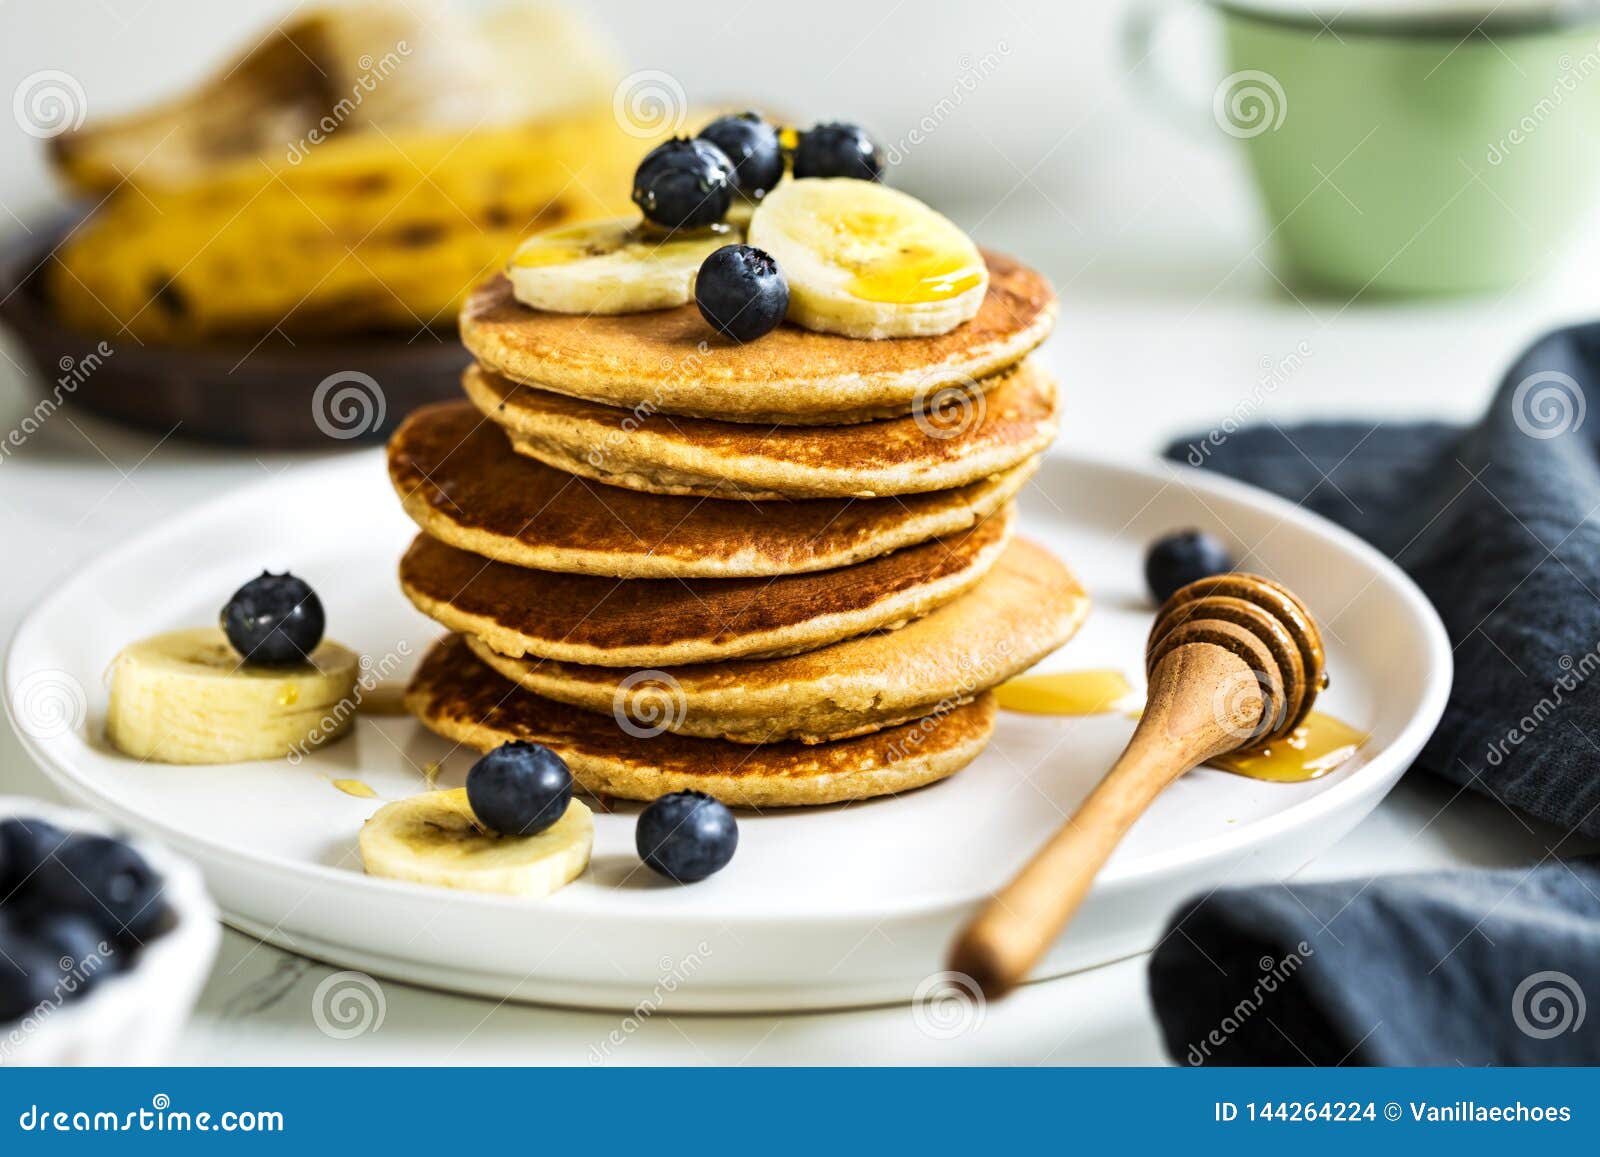 banana, oat pancakes with fresh blueberry and banana